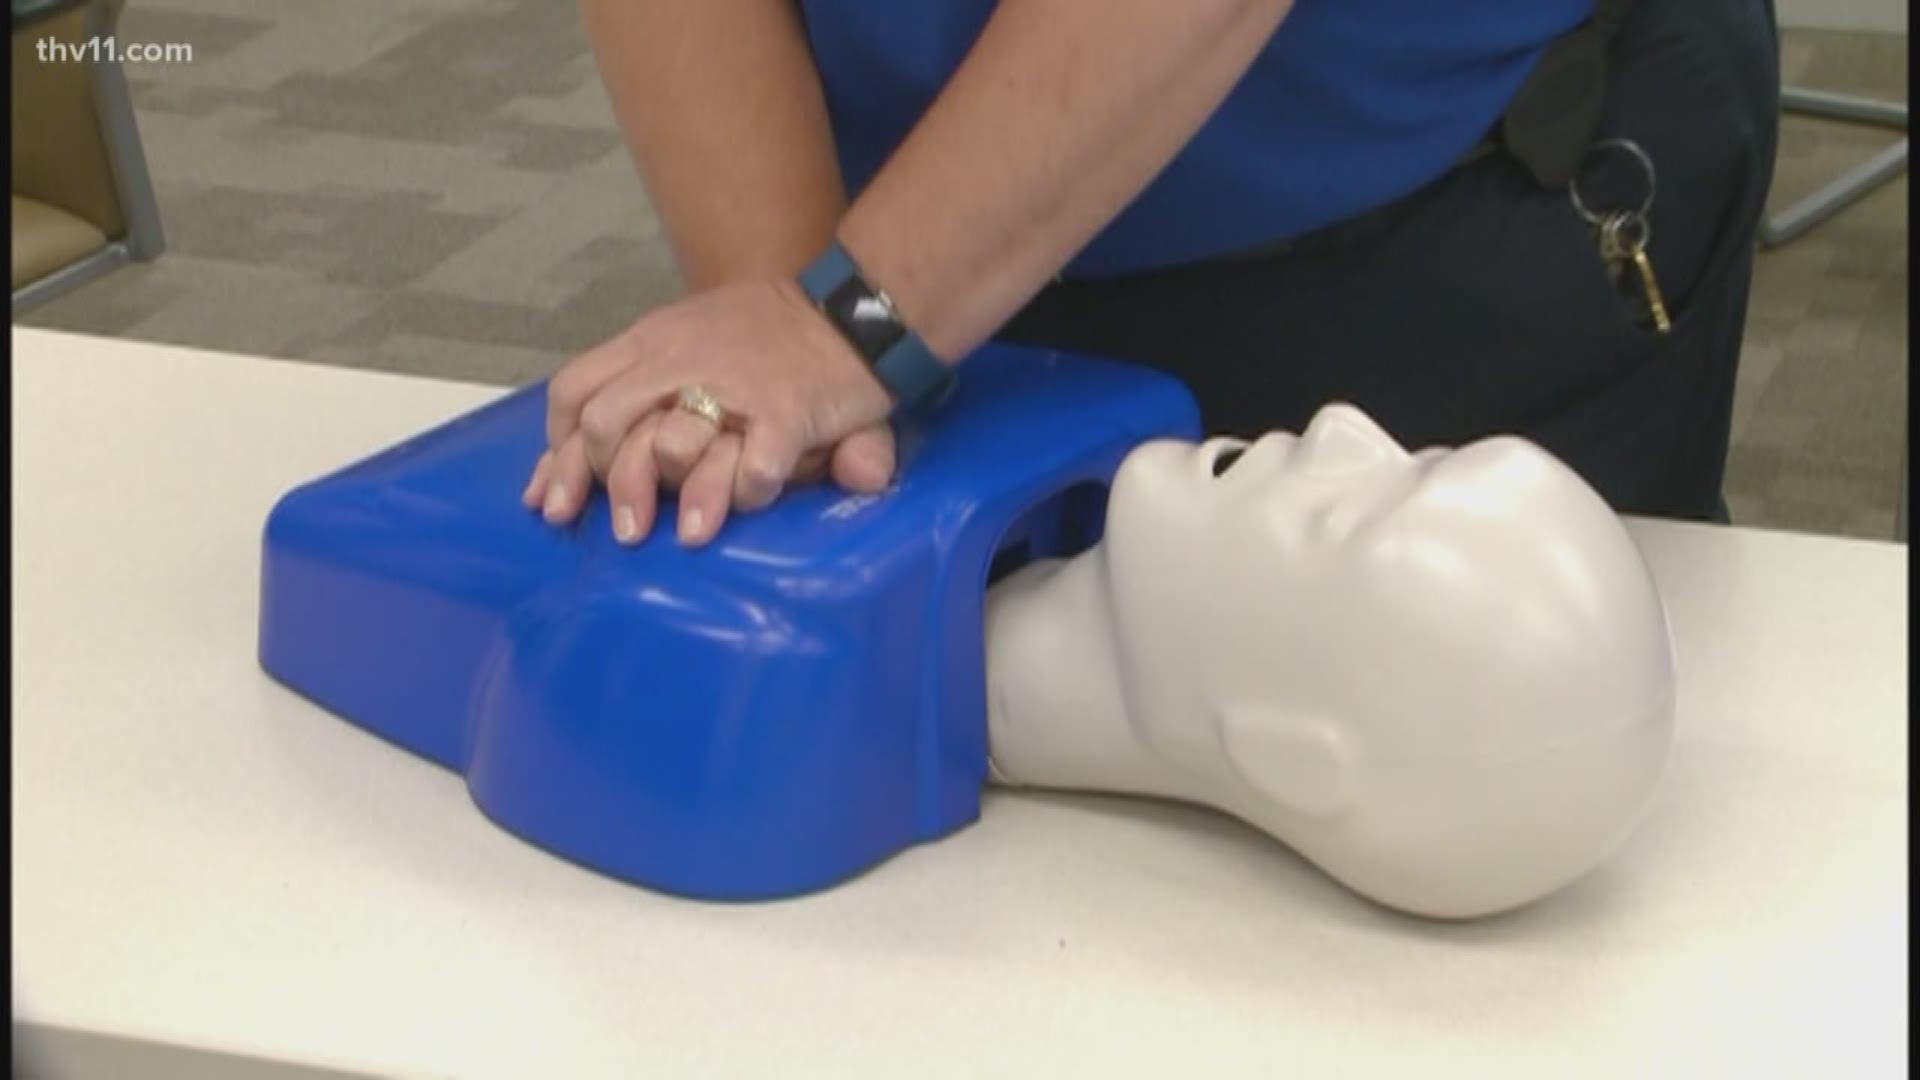 11 Listens: Finding a CPR class near you